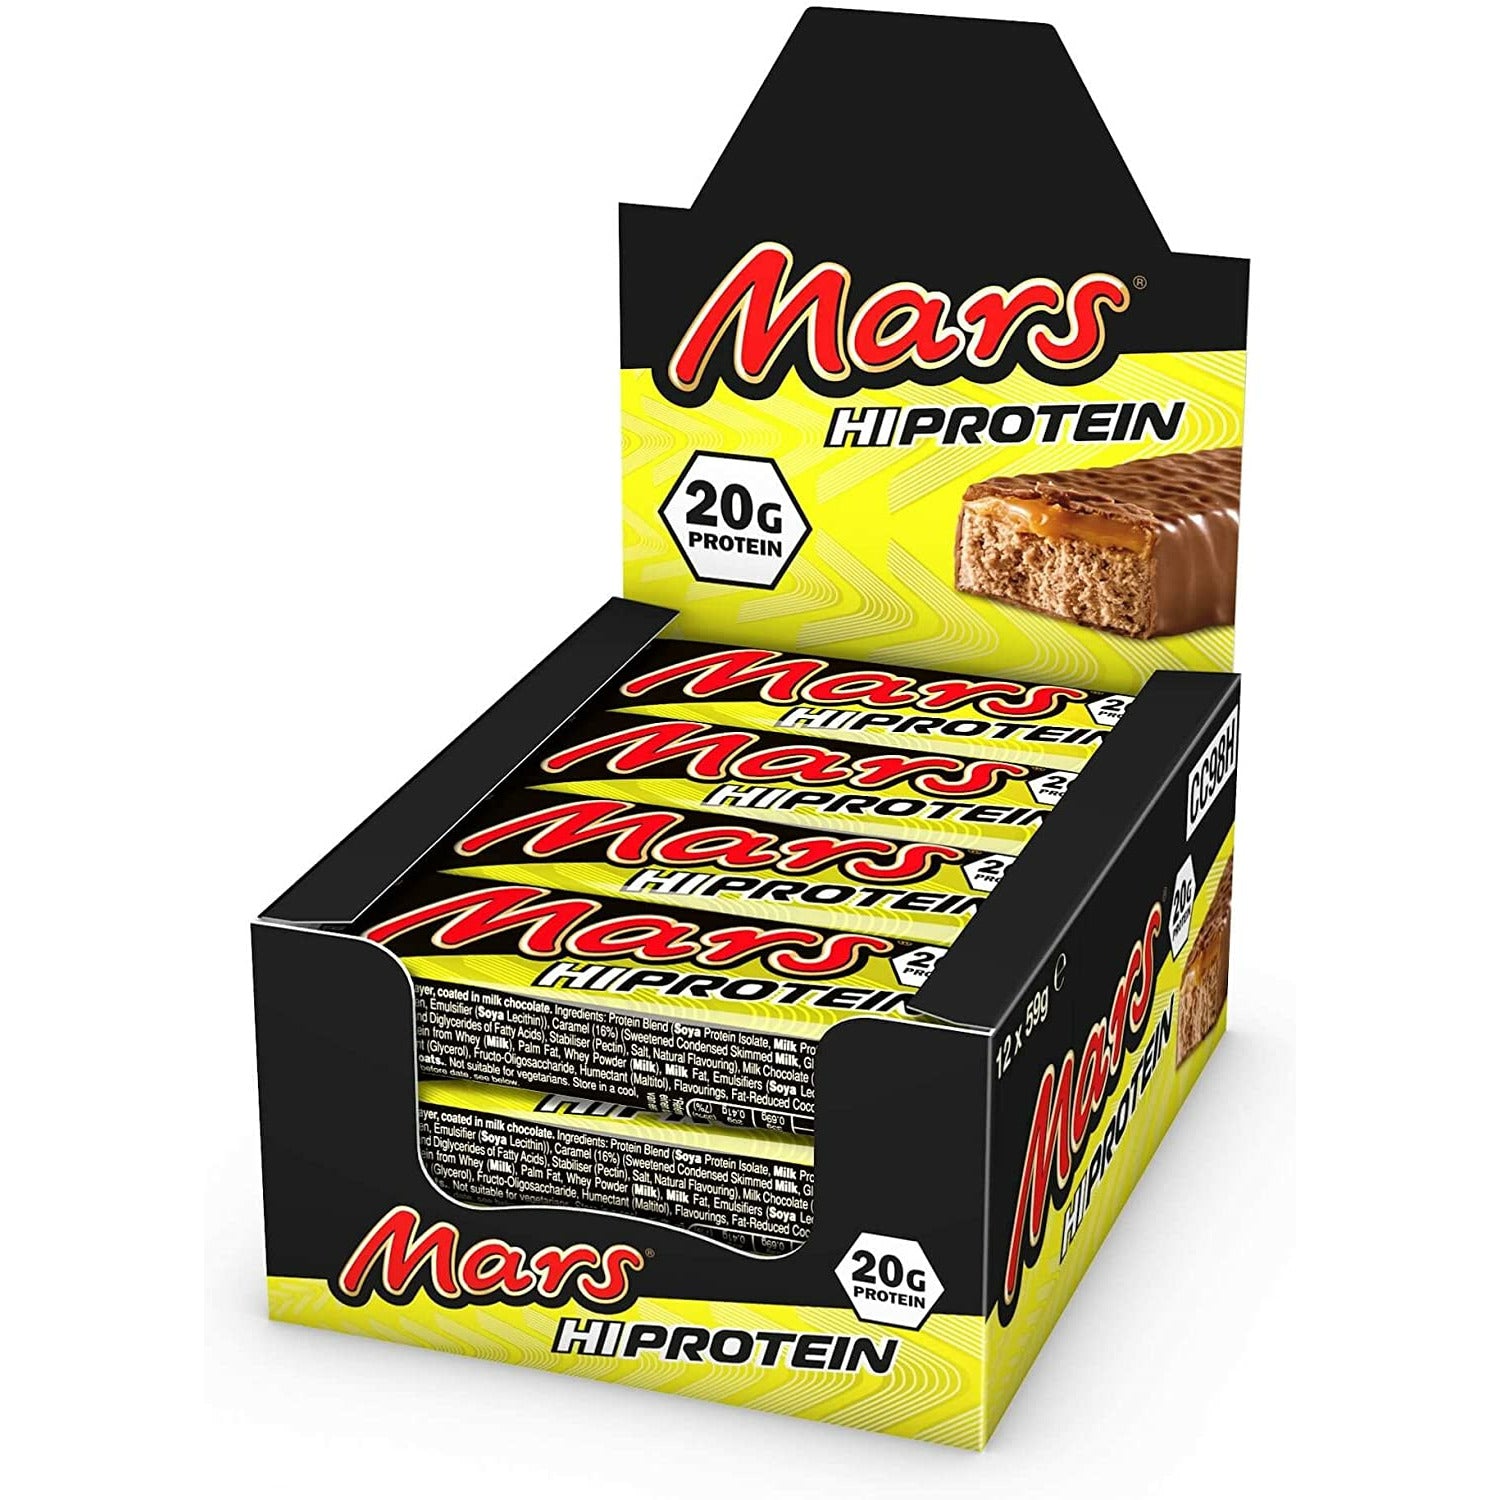 Mars Brand Hi-Protein Bar (1 BOX of 12) mars-brand-hi-protein-bar-1-box-of-12 Protein Snacks Mars Bar Original BEST BY FEB/2023 Mars Brand